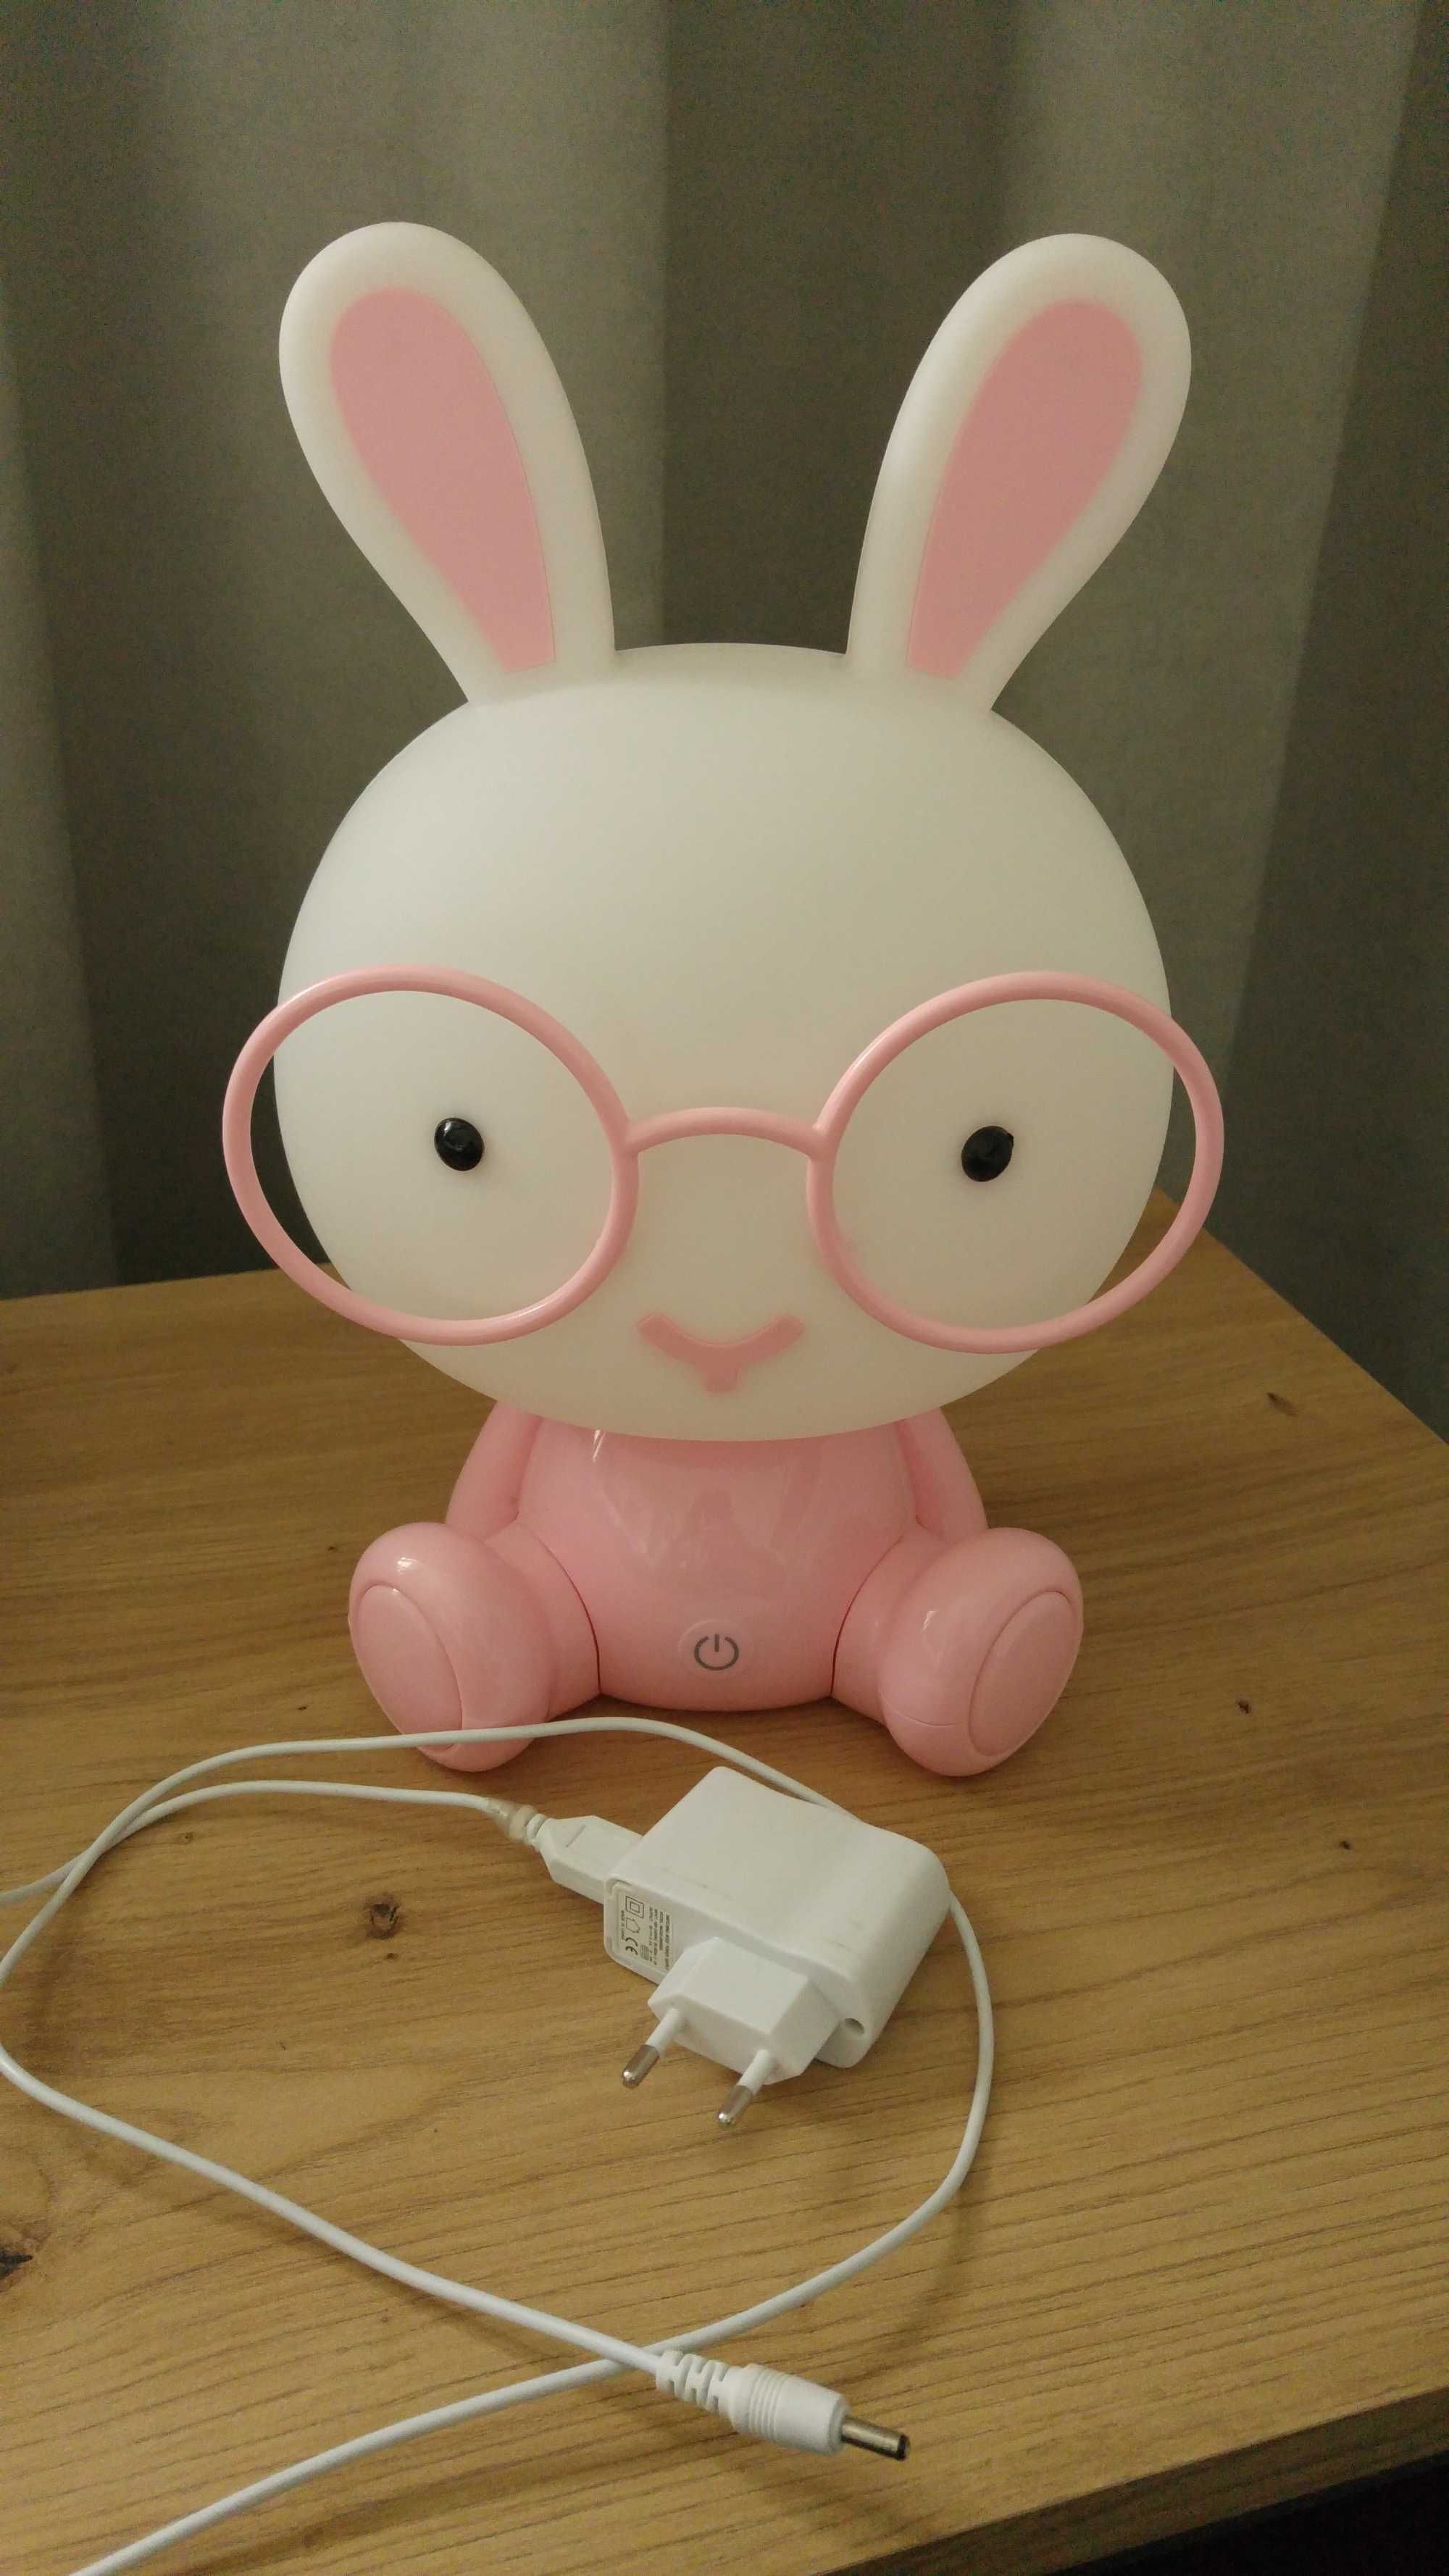 Lampka dziecięca - królik, producent Polux. Okazja!